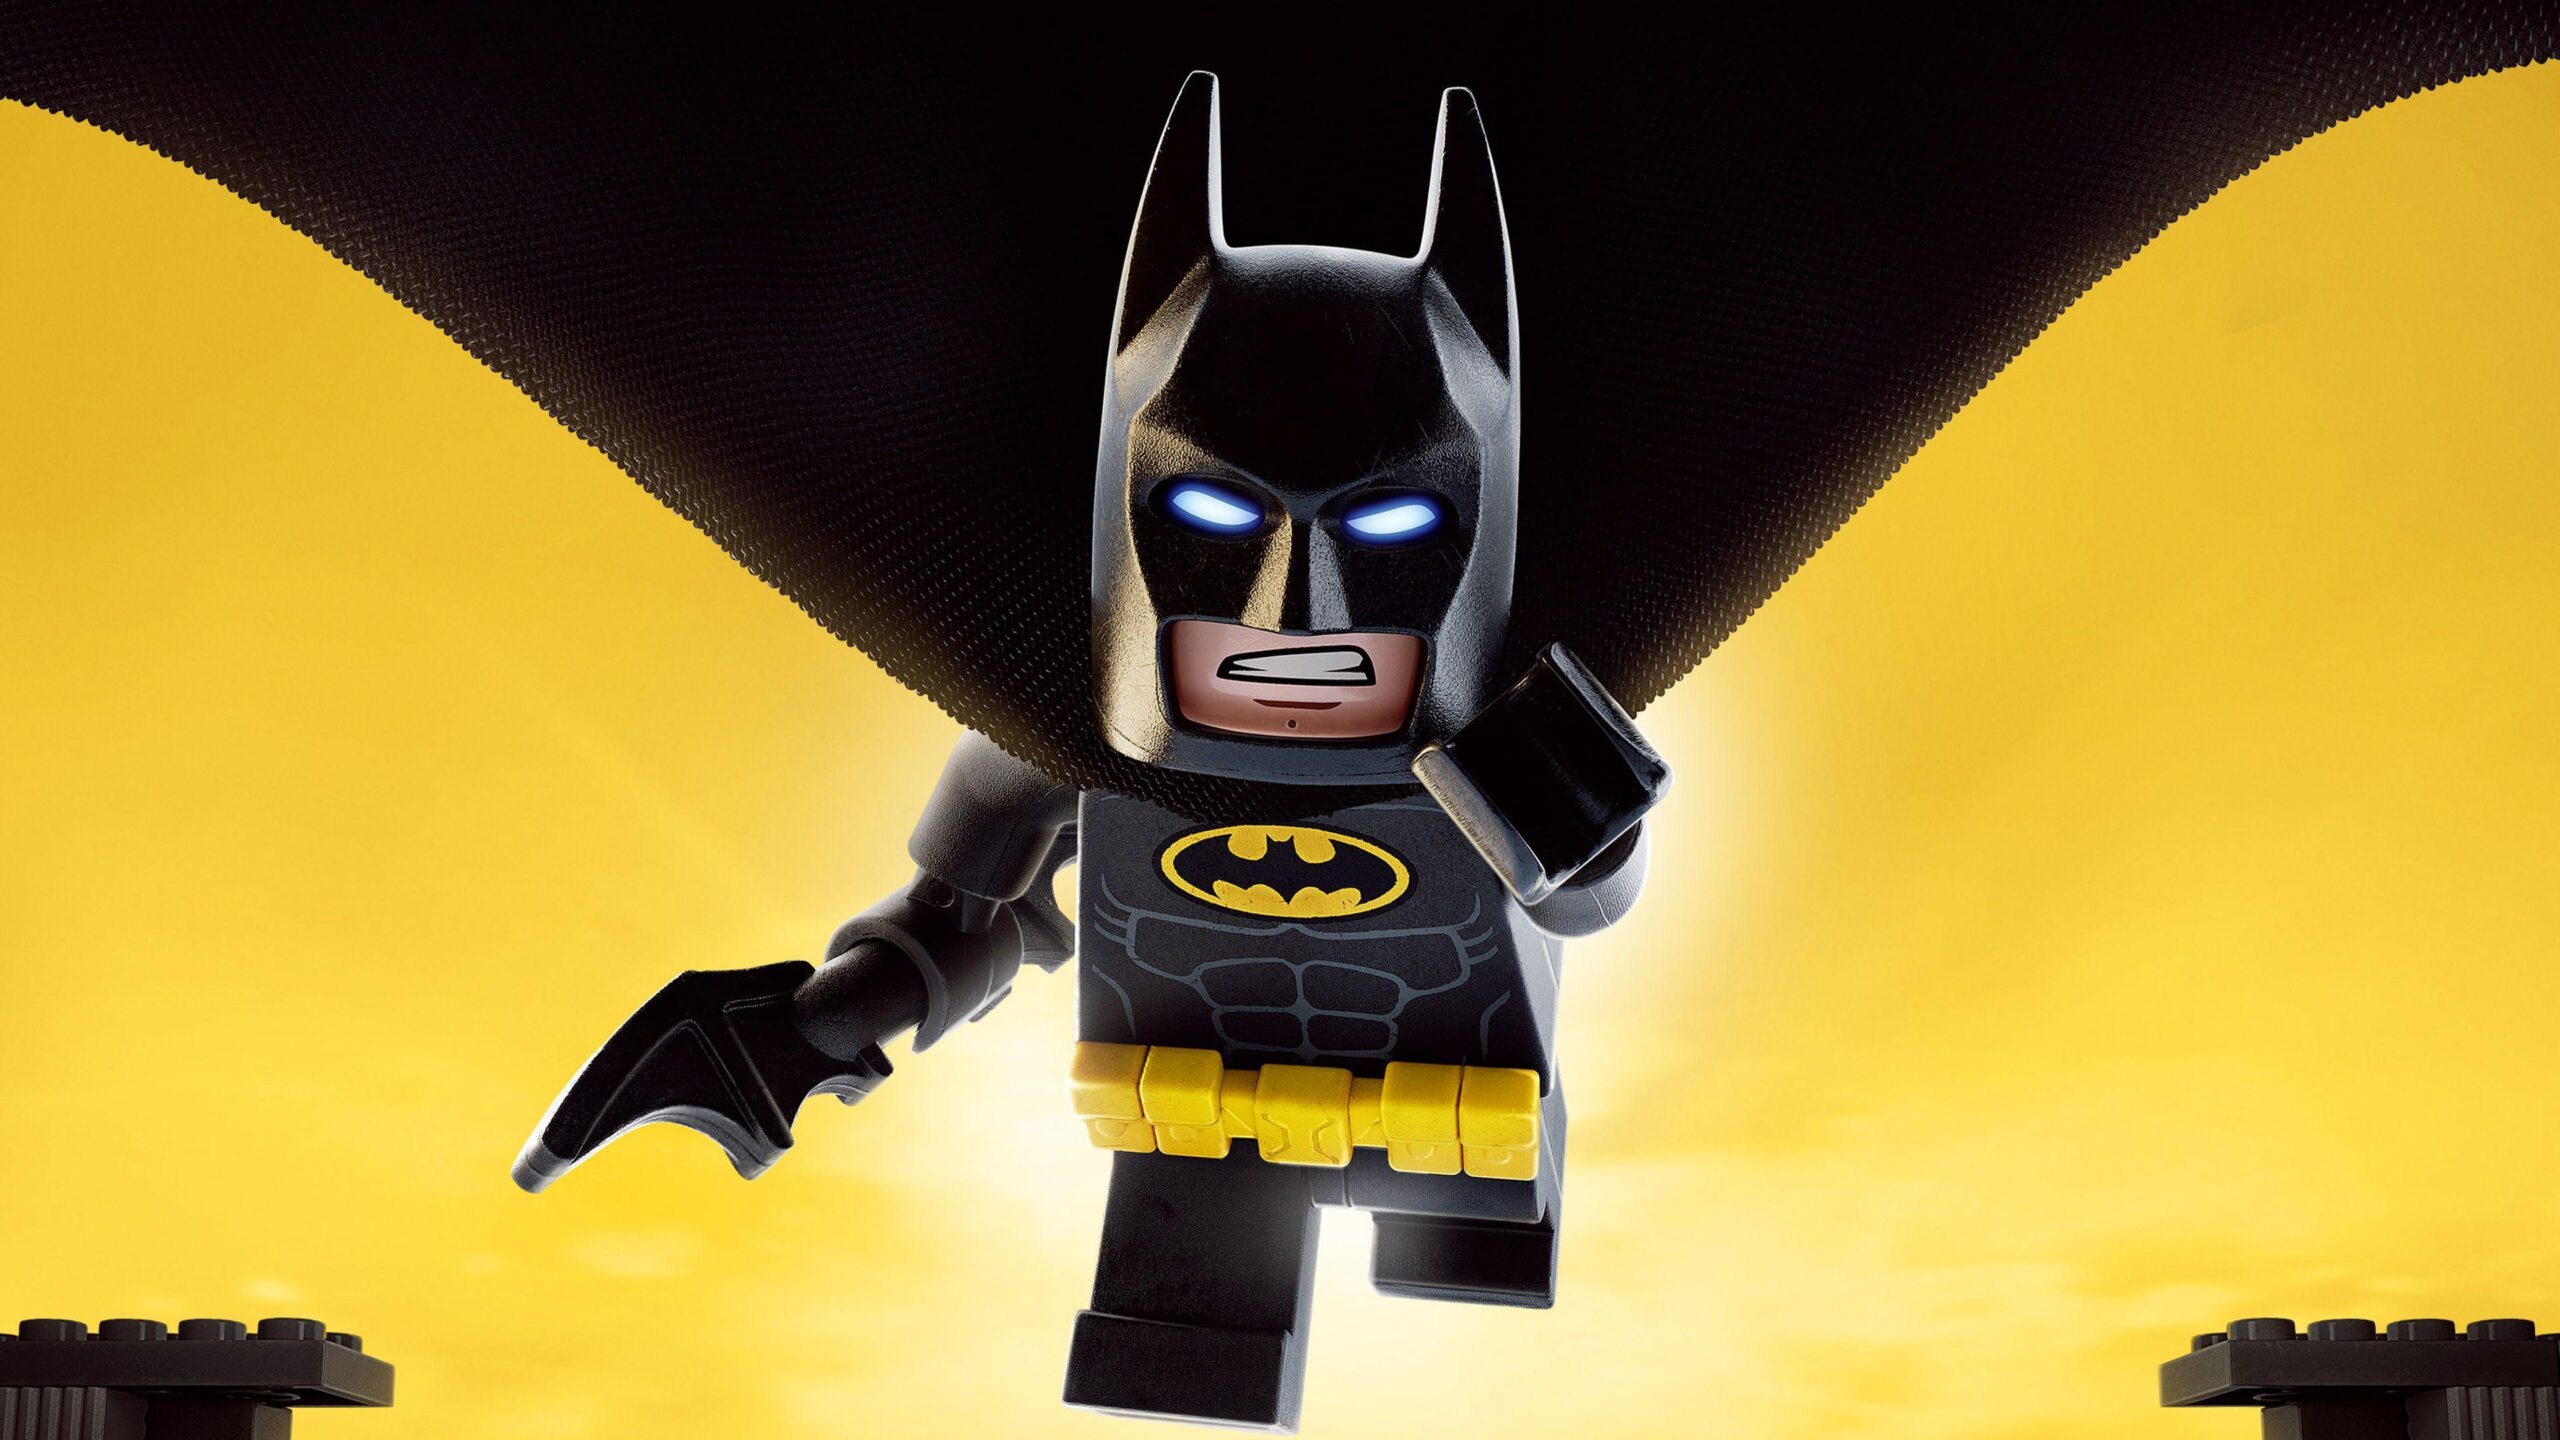 Wallpapers The Lego Batman Movie, LEGO Batman, LEGO Superman,